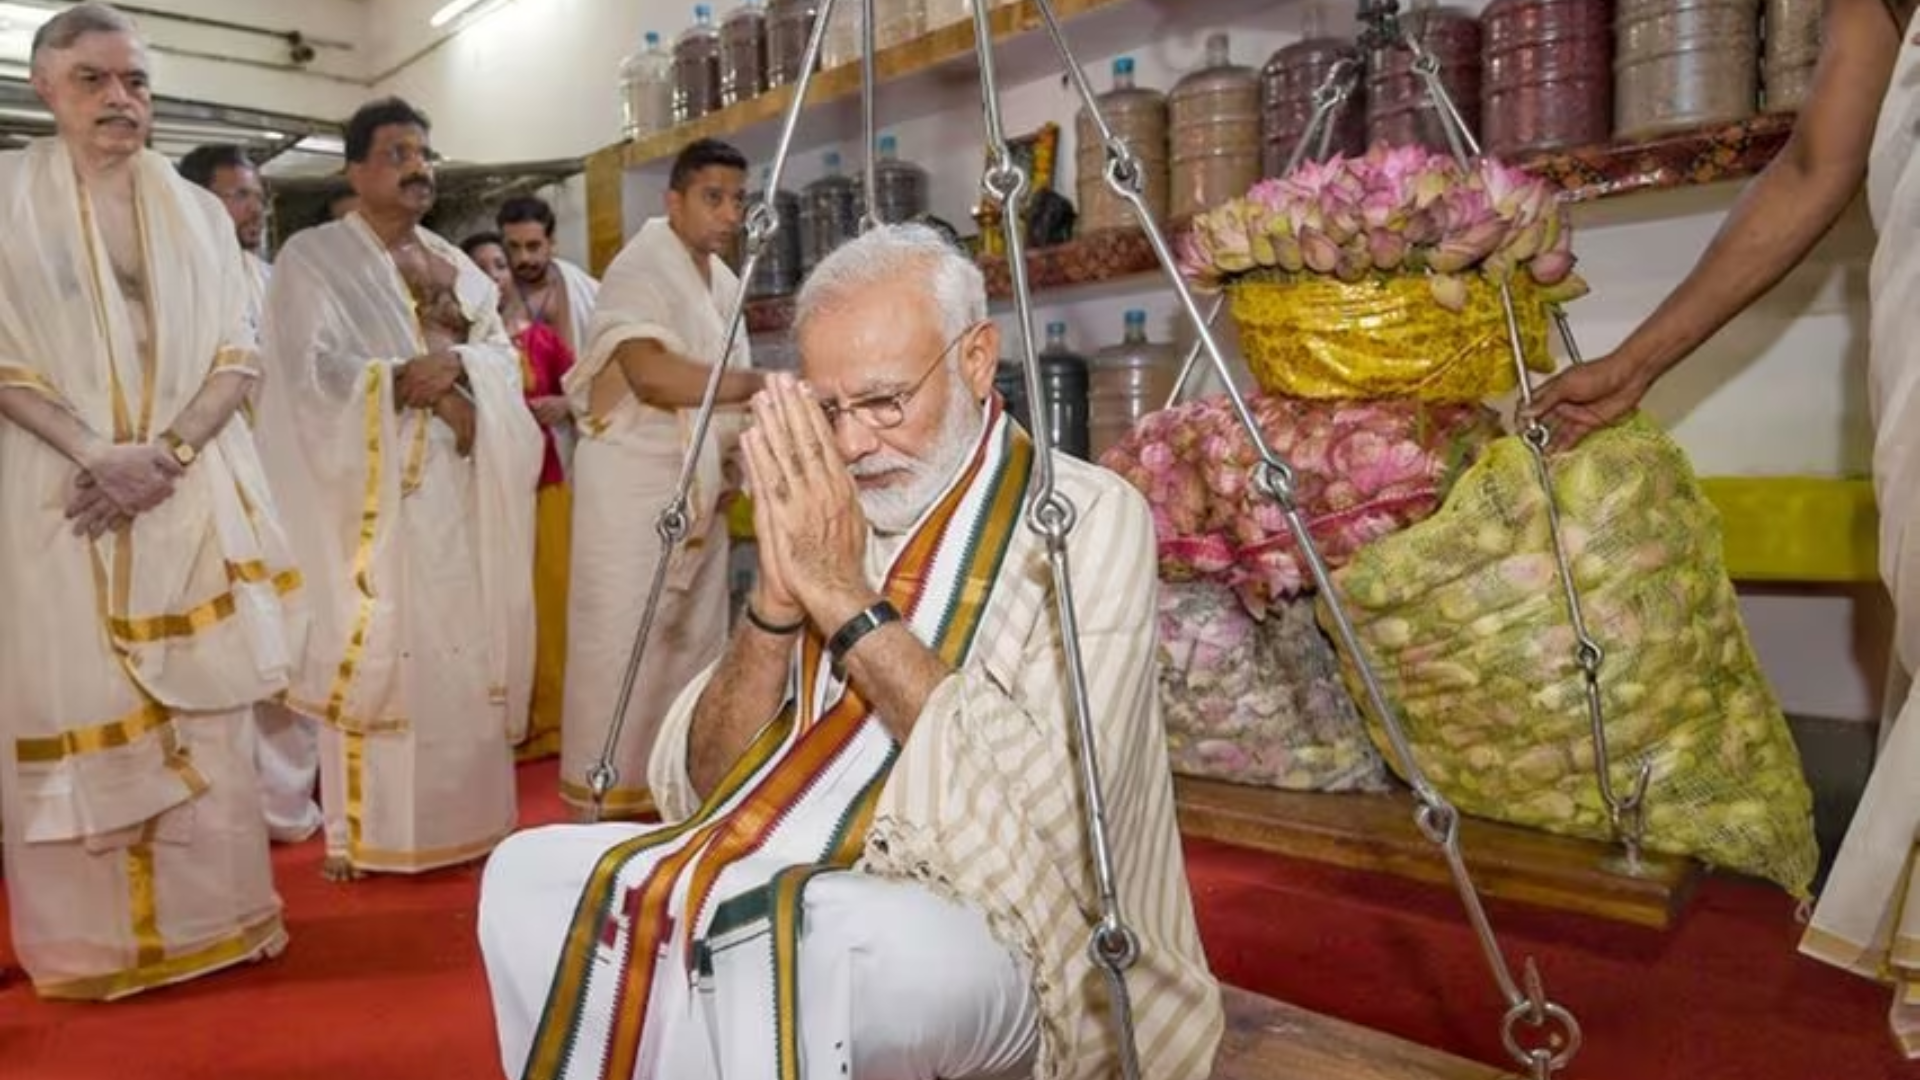 PM Modi’s Kerala Visit: PM Modi Performs Puja, Darshan at Guruvayur Temple in Thrissur